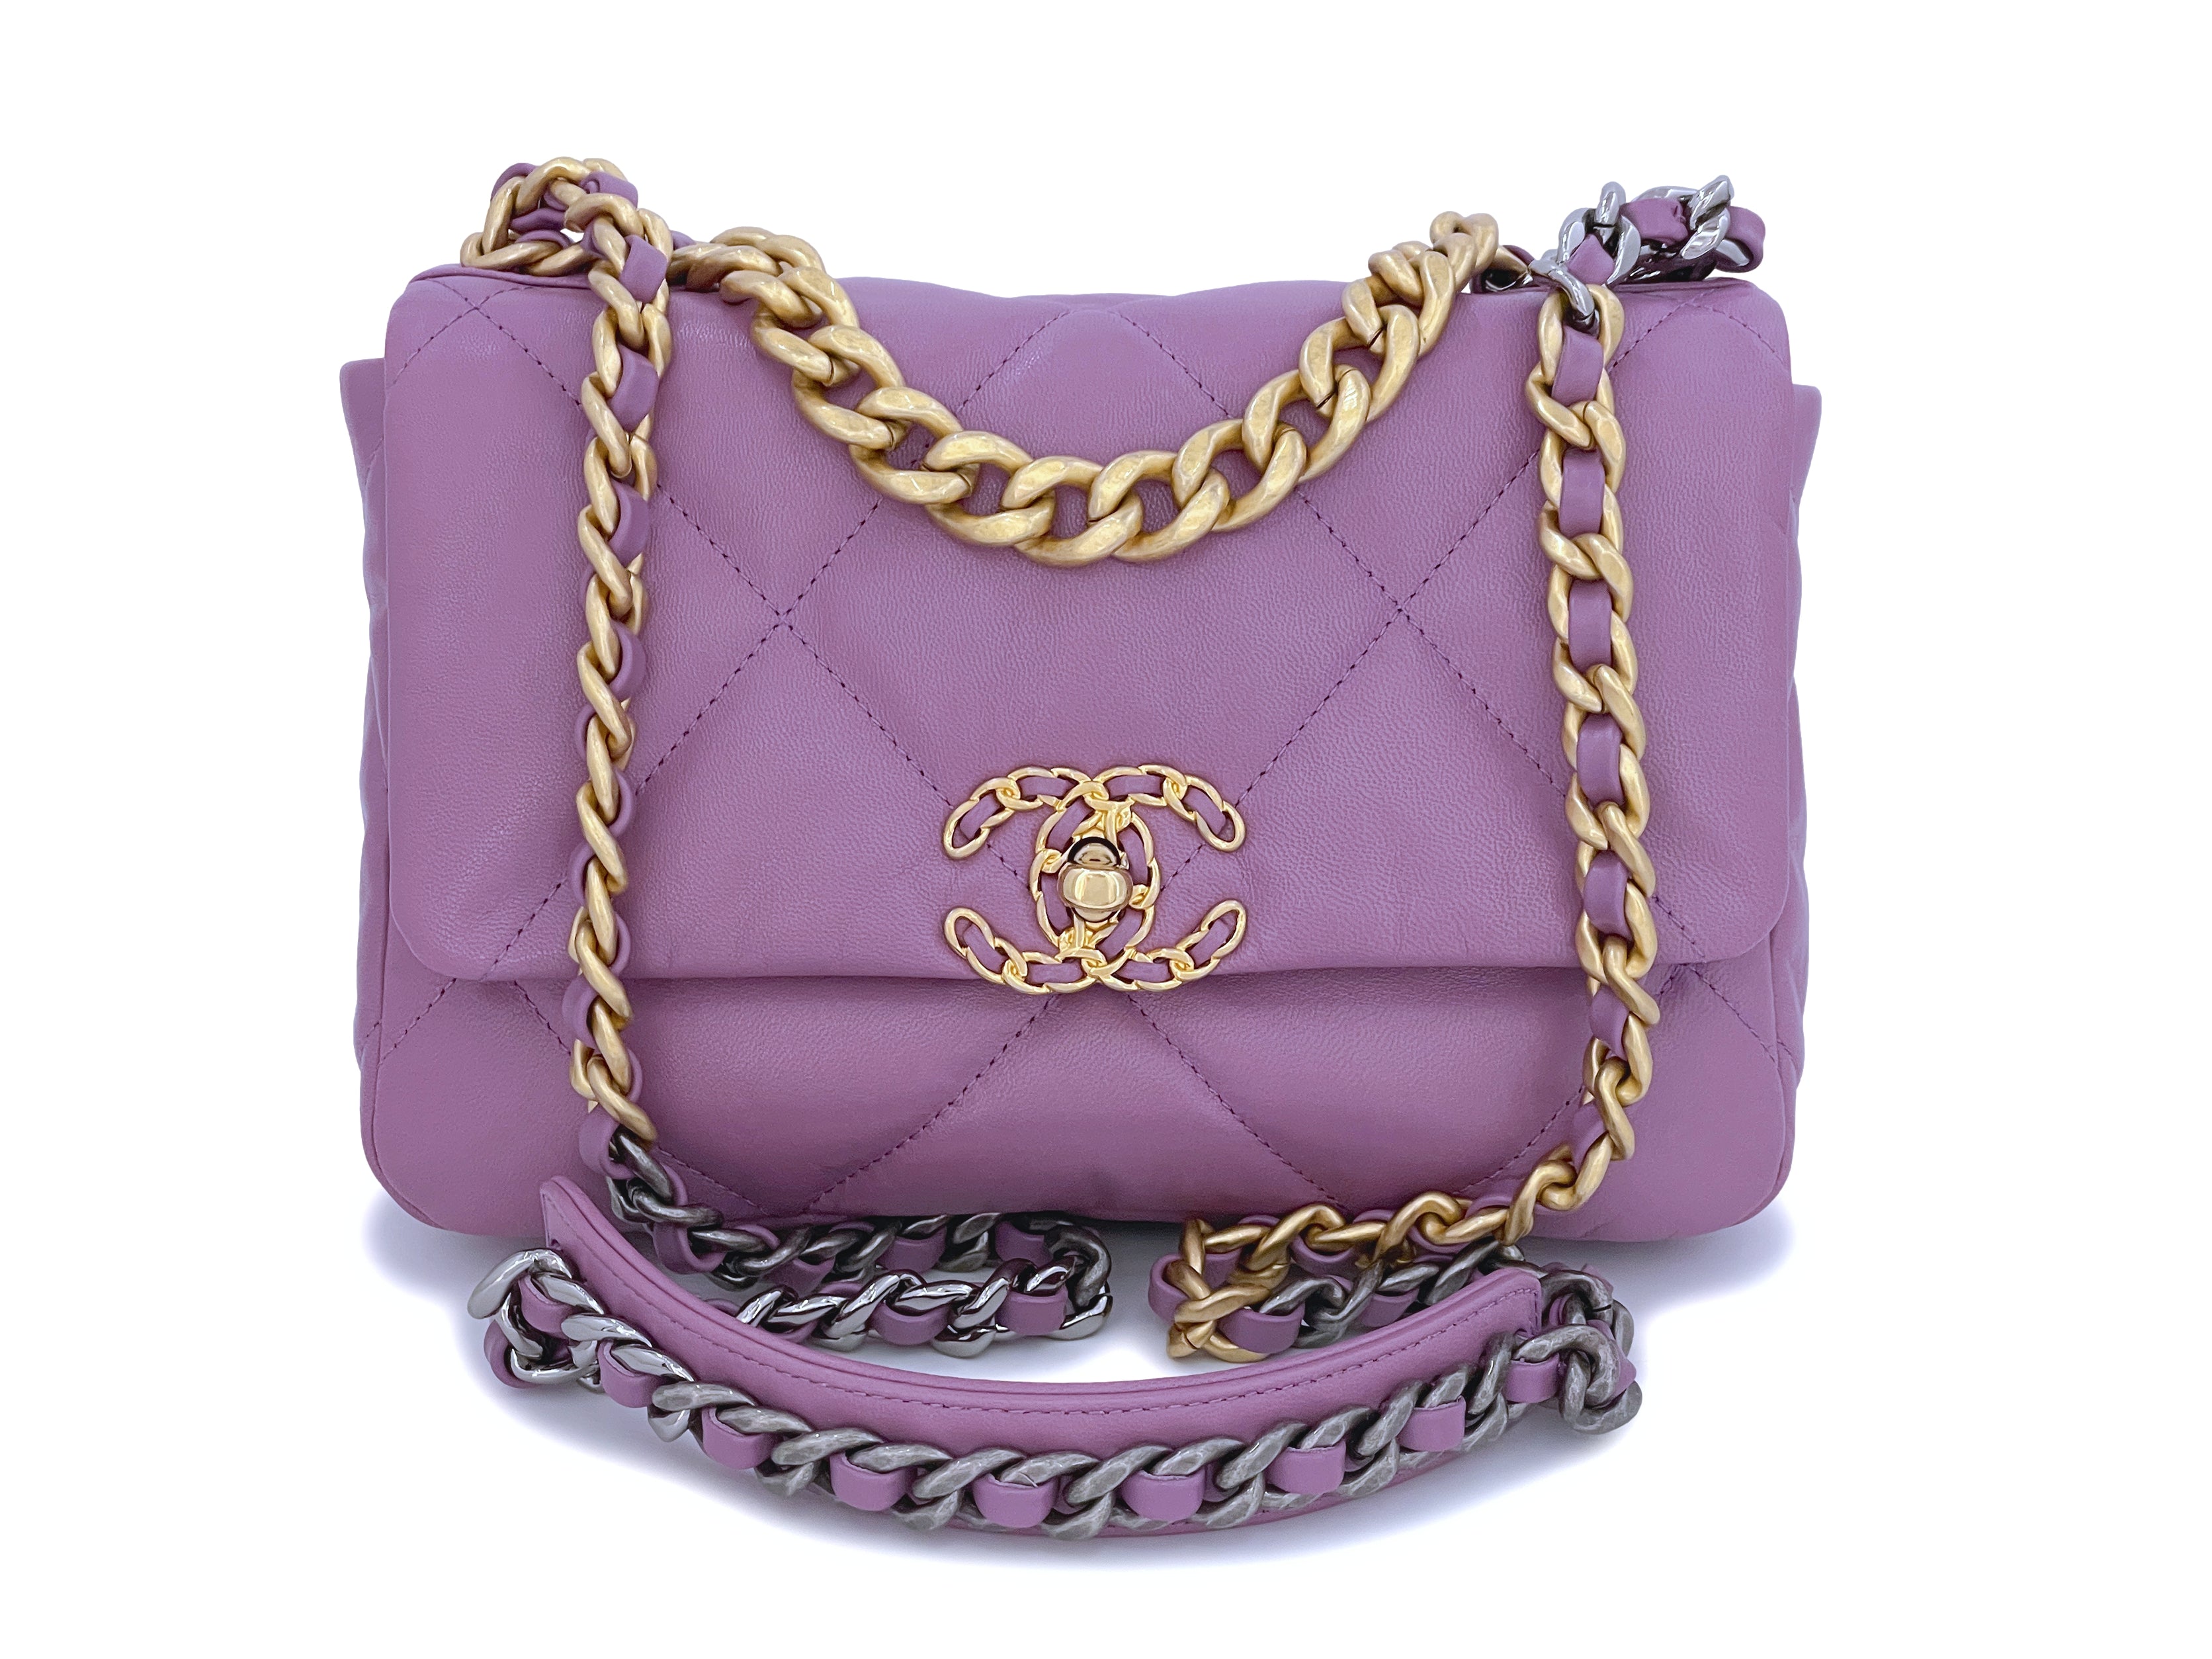 Chanel 19 flap bag  Bags, Fashion bags, Chanel bag